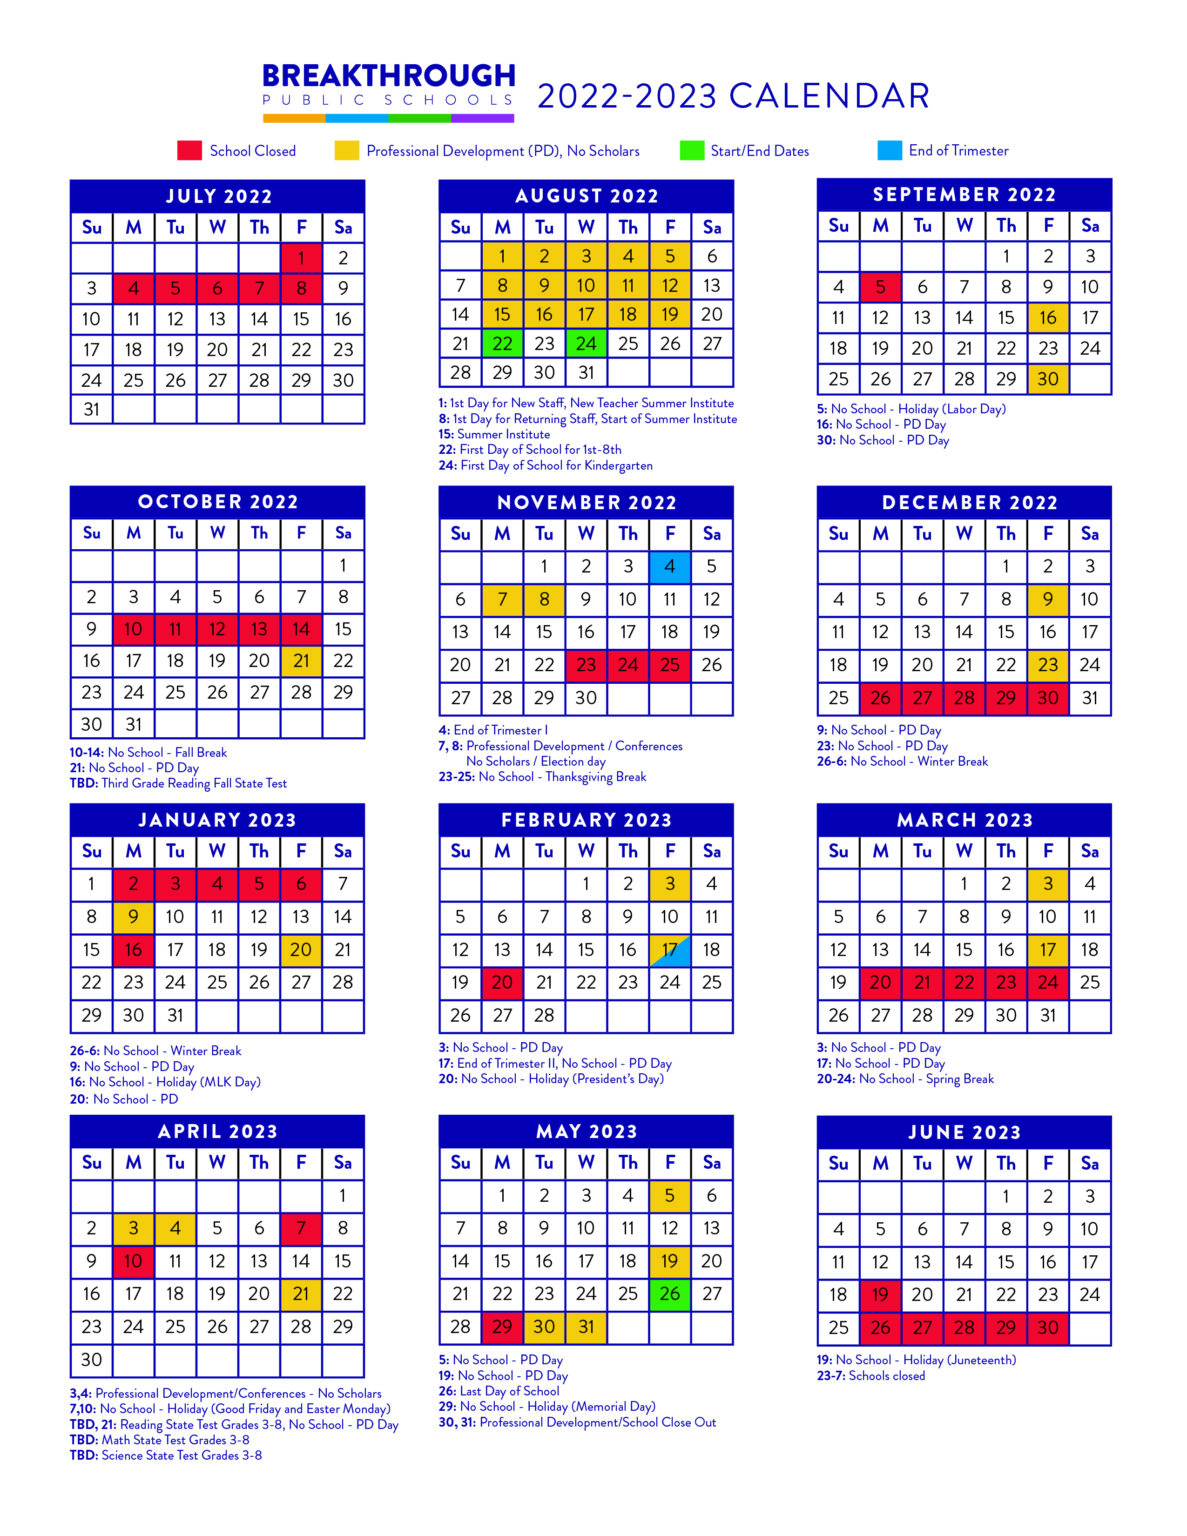 calendar-breakthrough-public-schools-bps